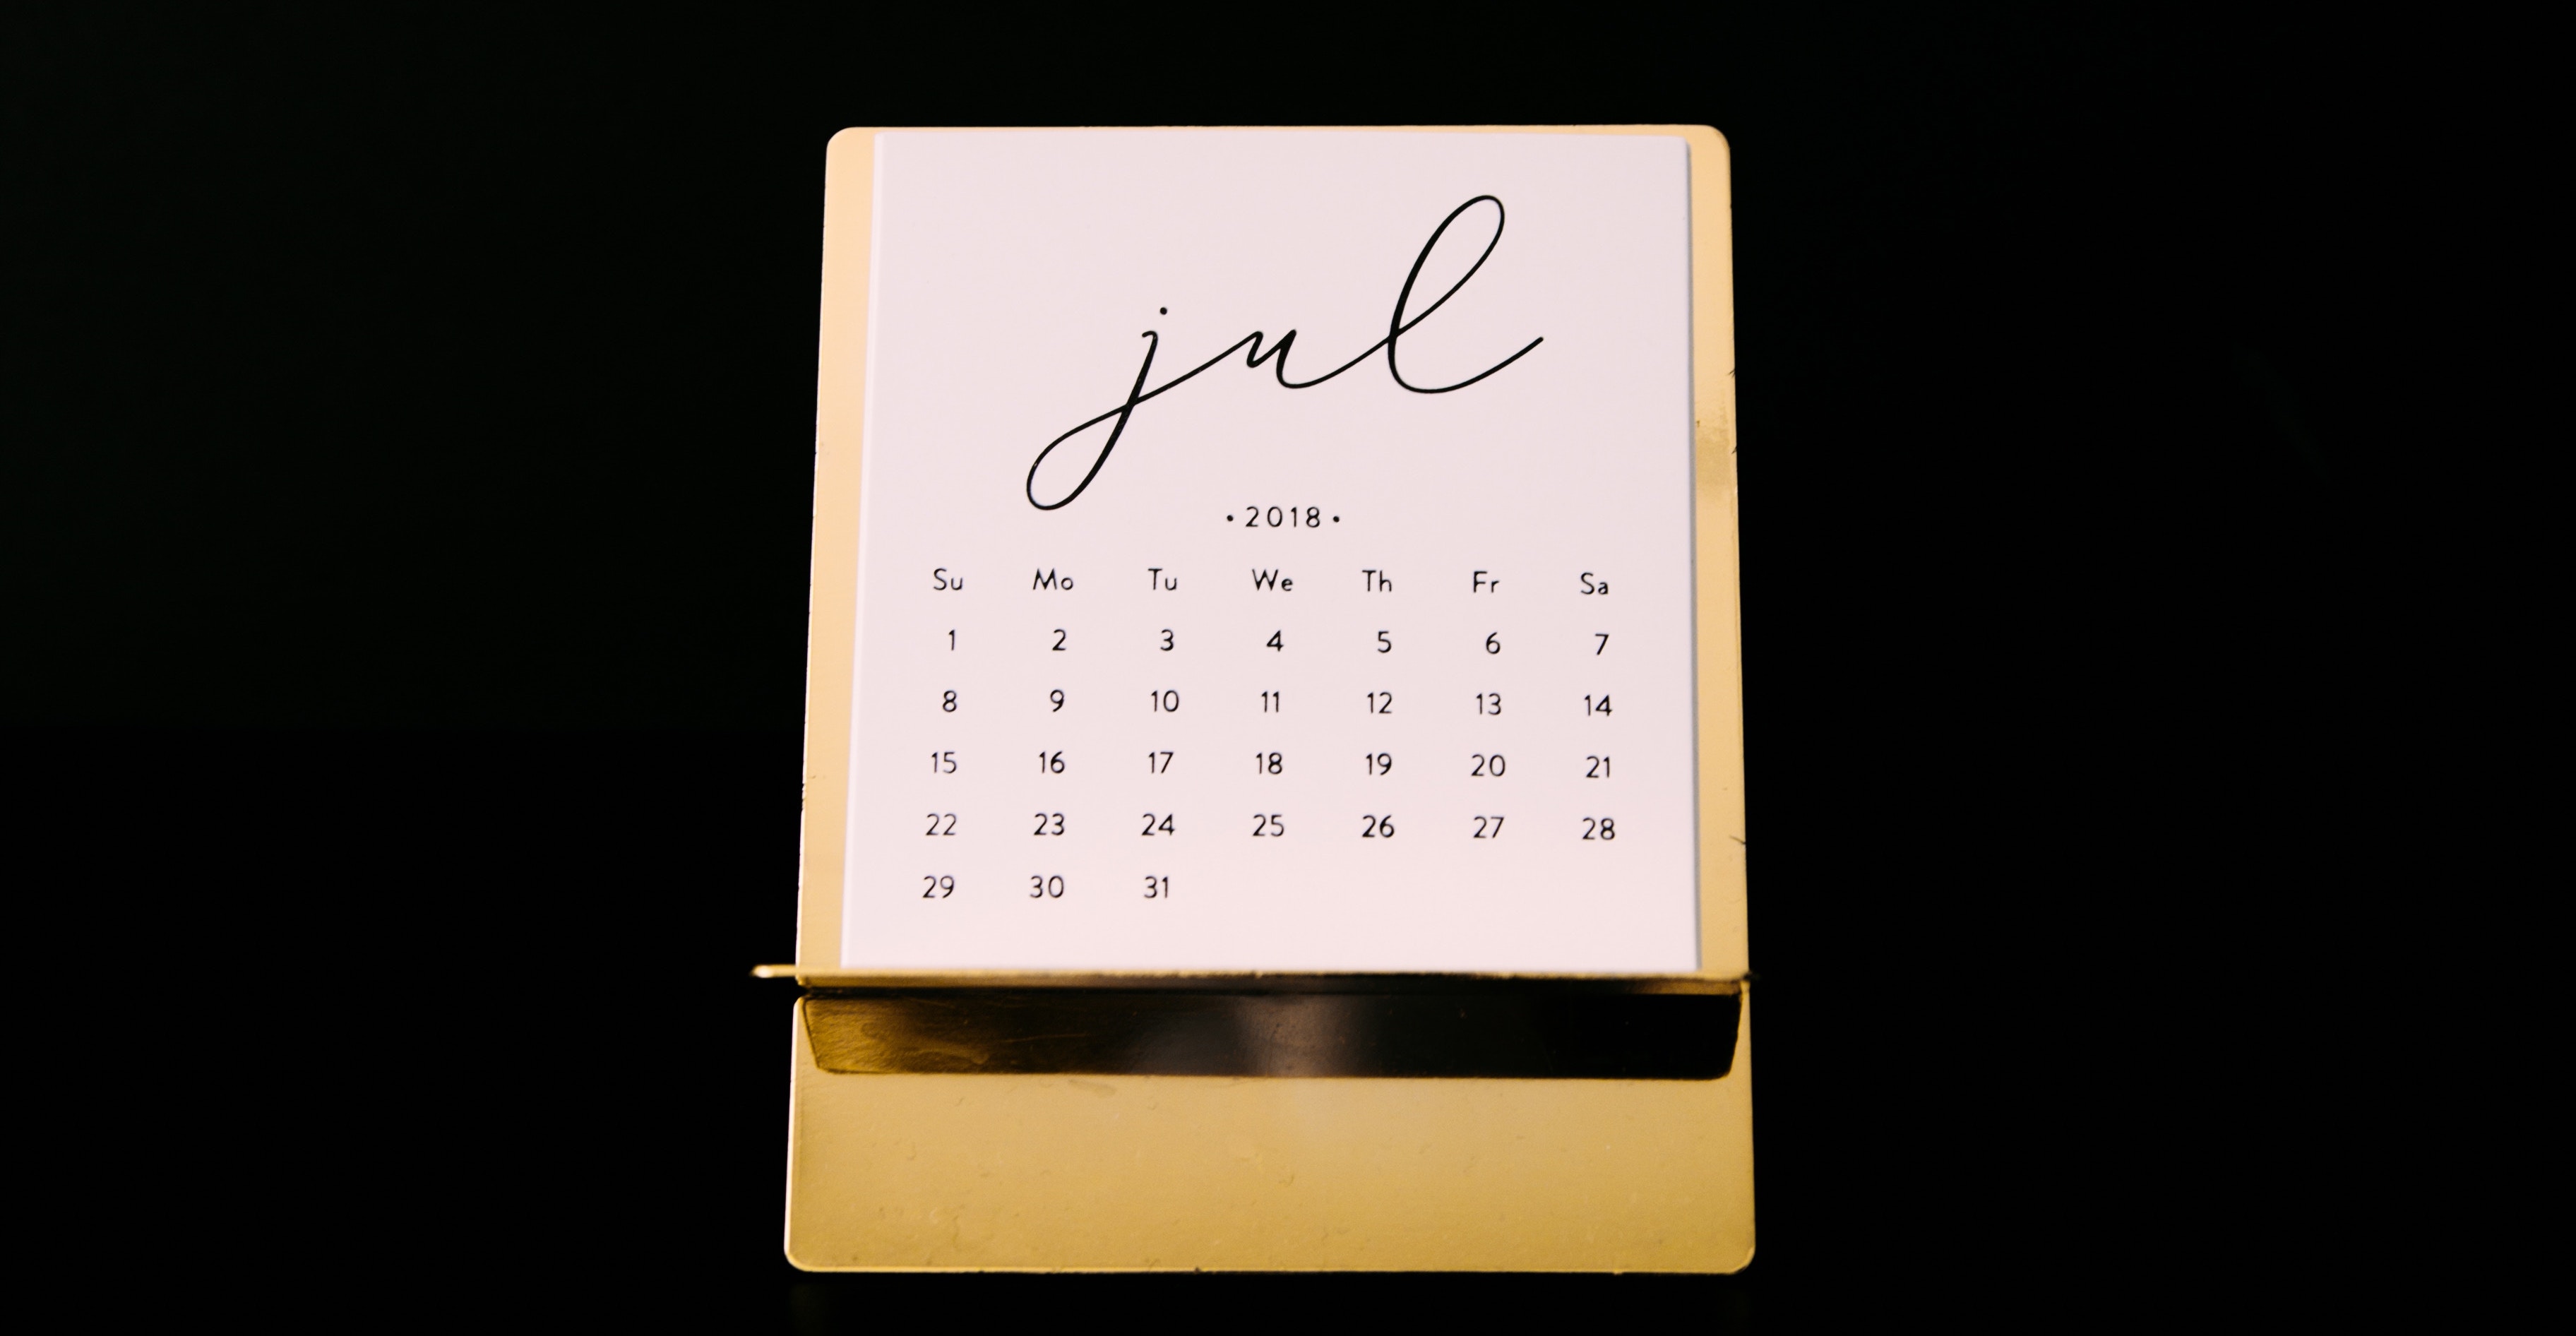 July desk calendar